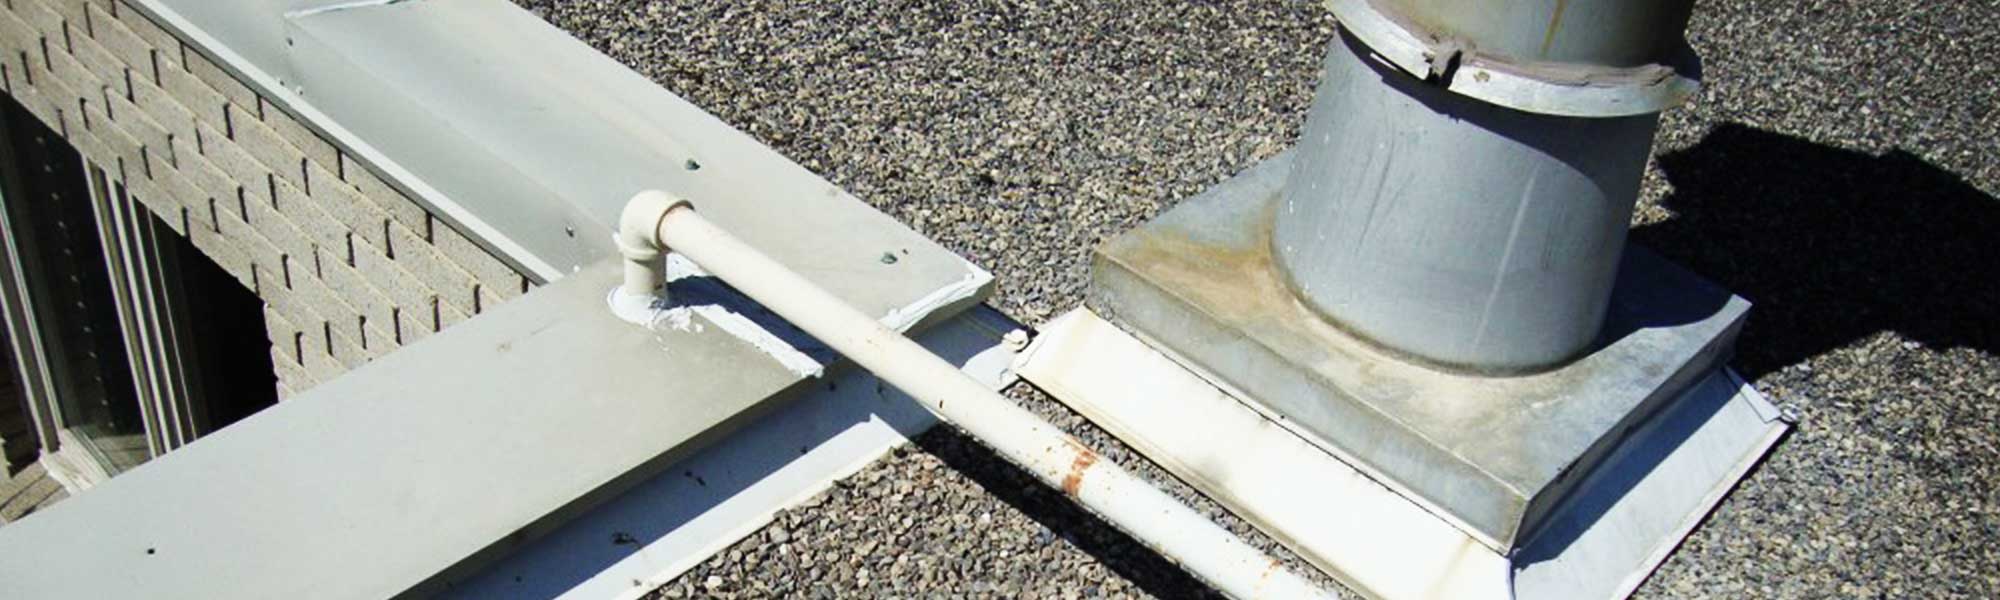 Commercial Roof Gutter System